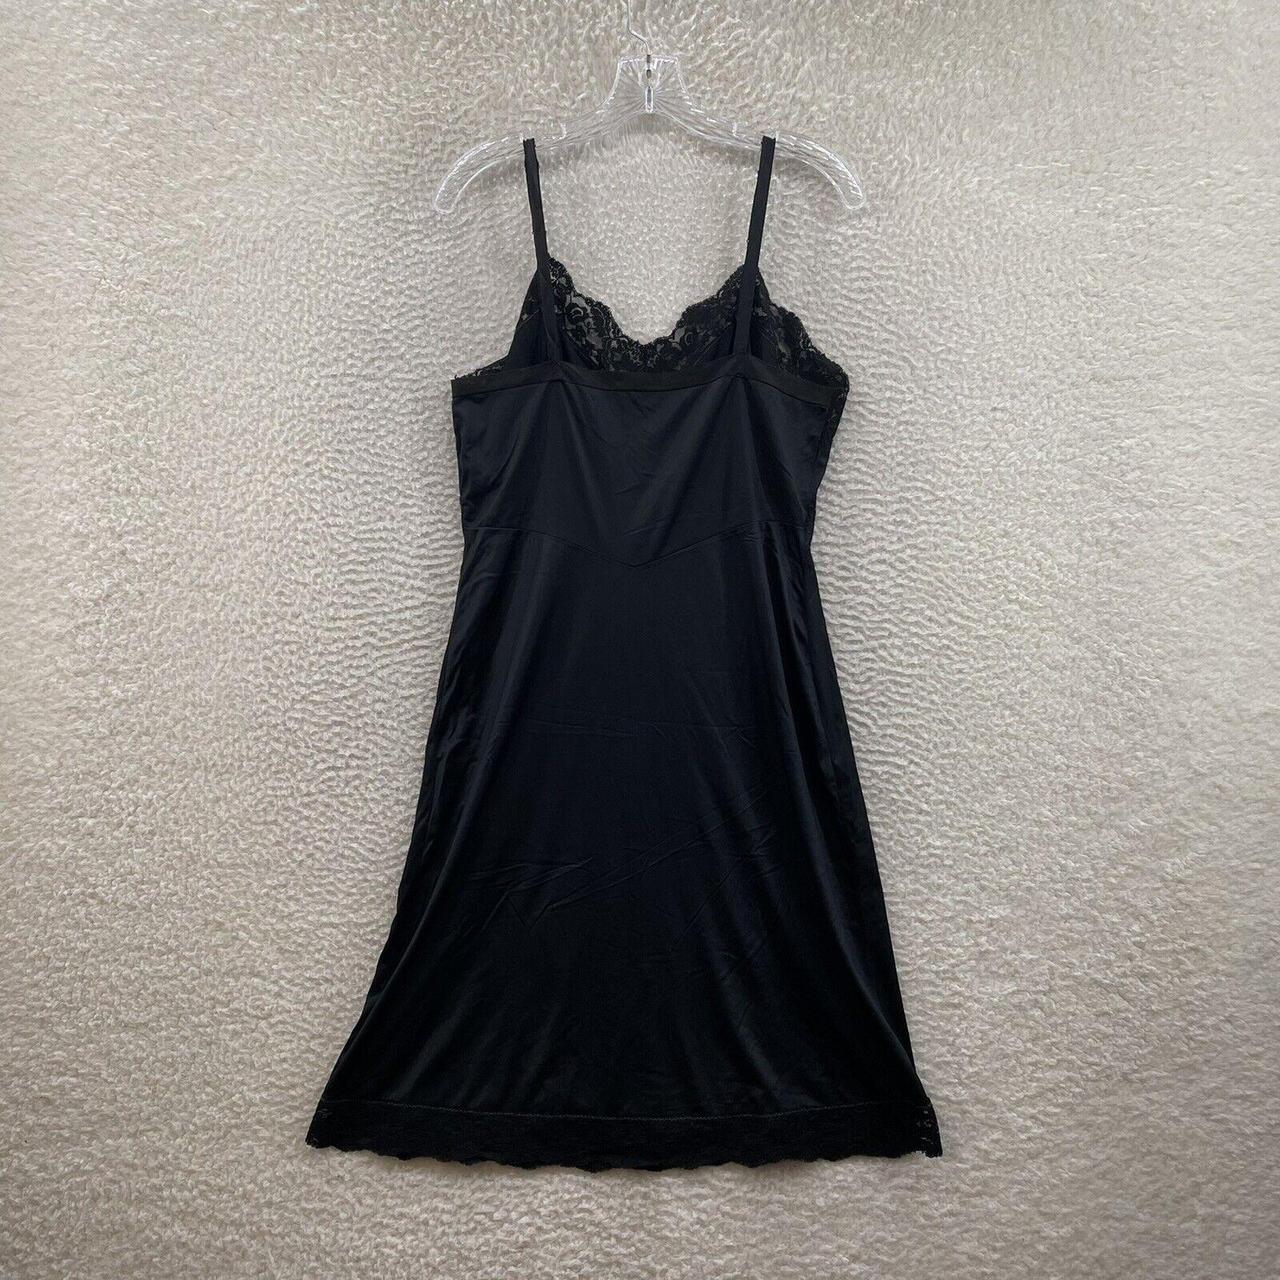 Product Image 2 - Vintage Adonna Black Nylon Lace